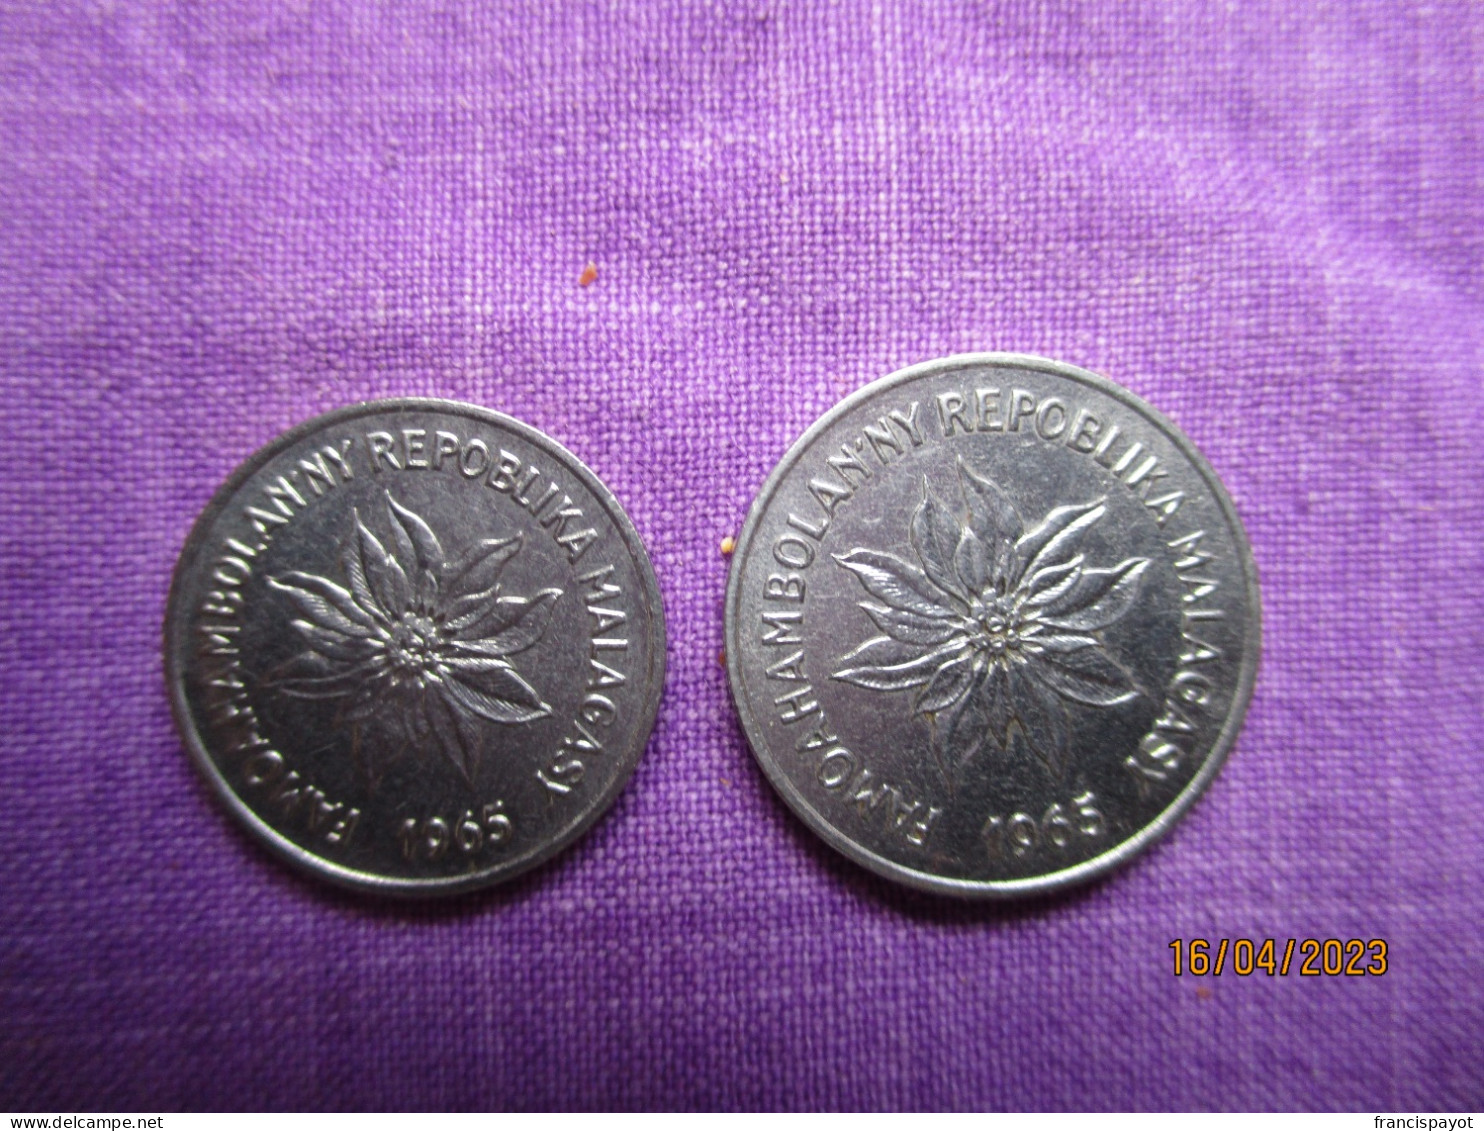 Madagascar: 1 Franc + 2 Francs 1965 - Madagaskar